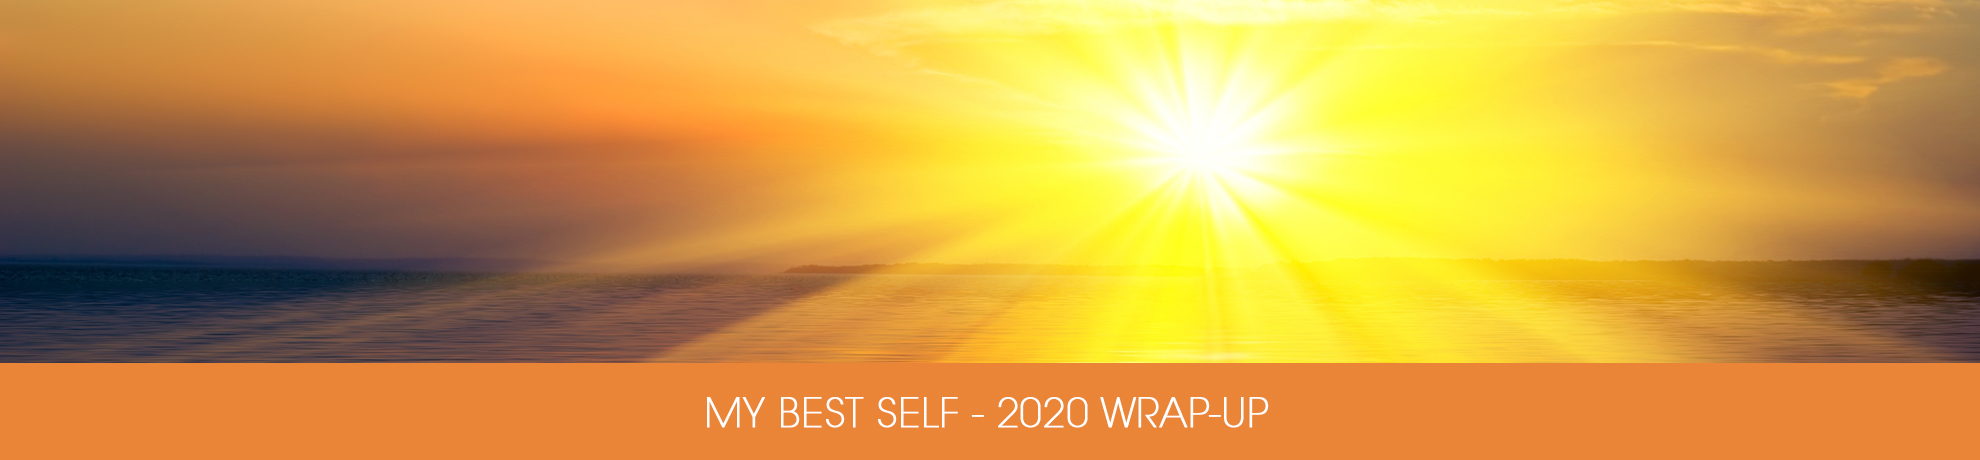 Blog - my best self 2020 wrap-up